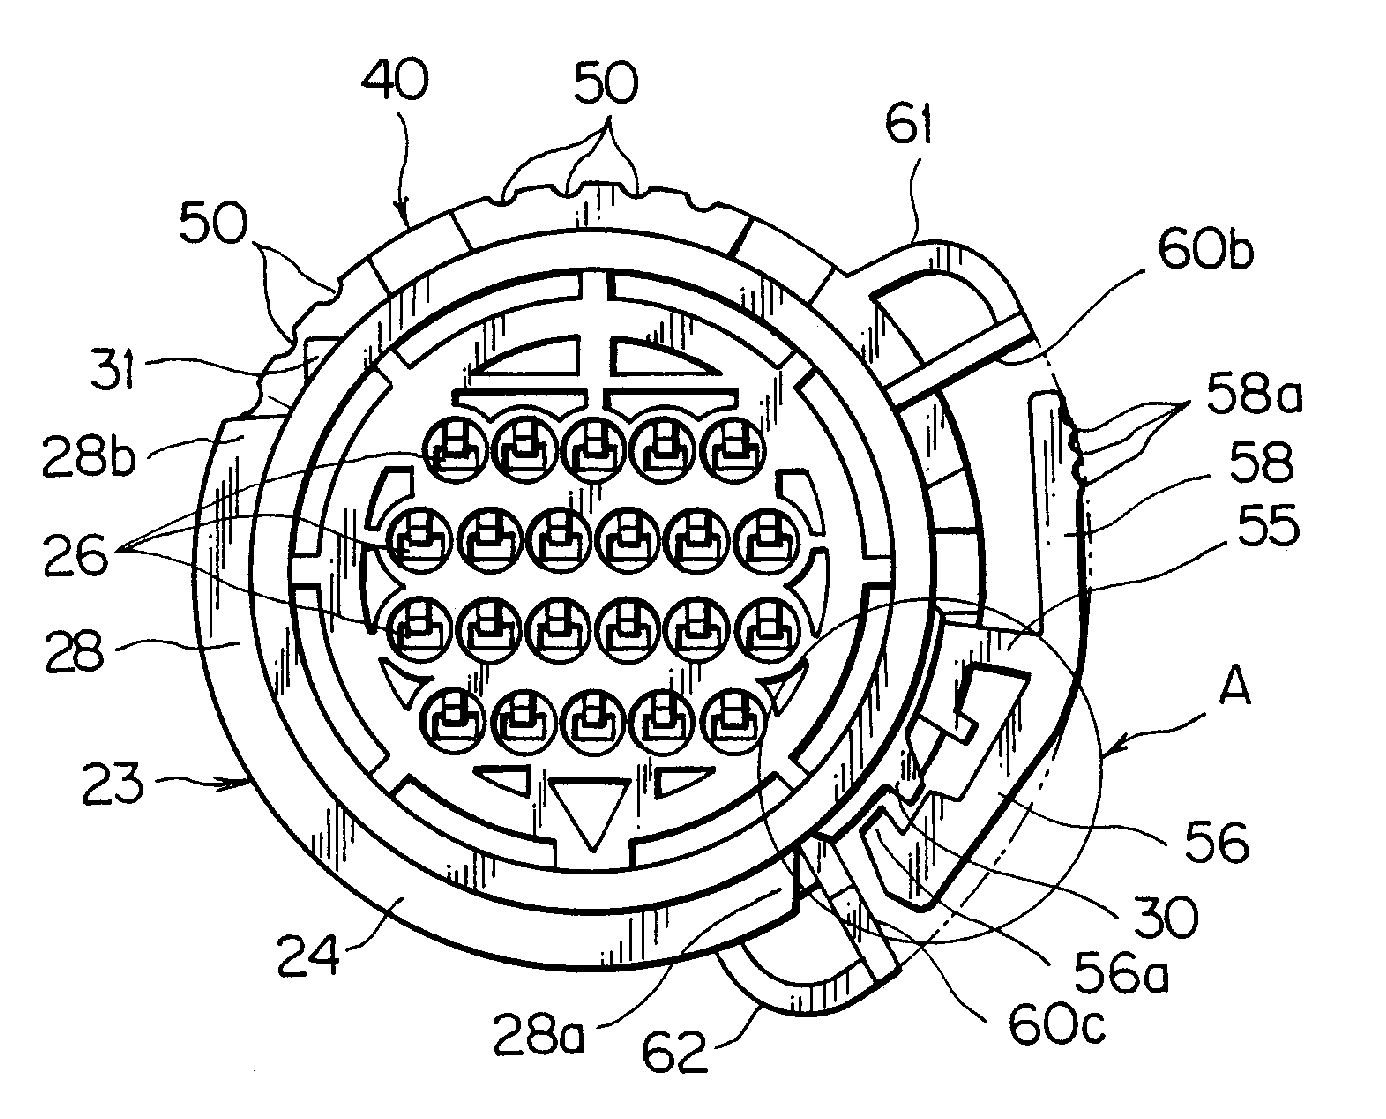 Circular connector assembly